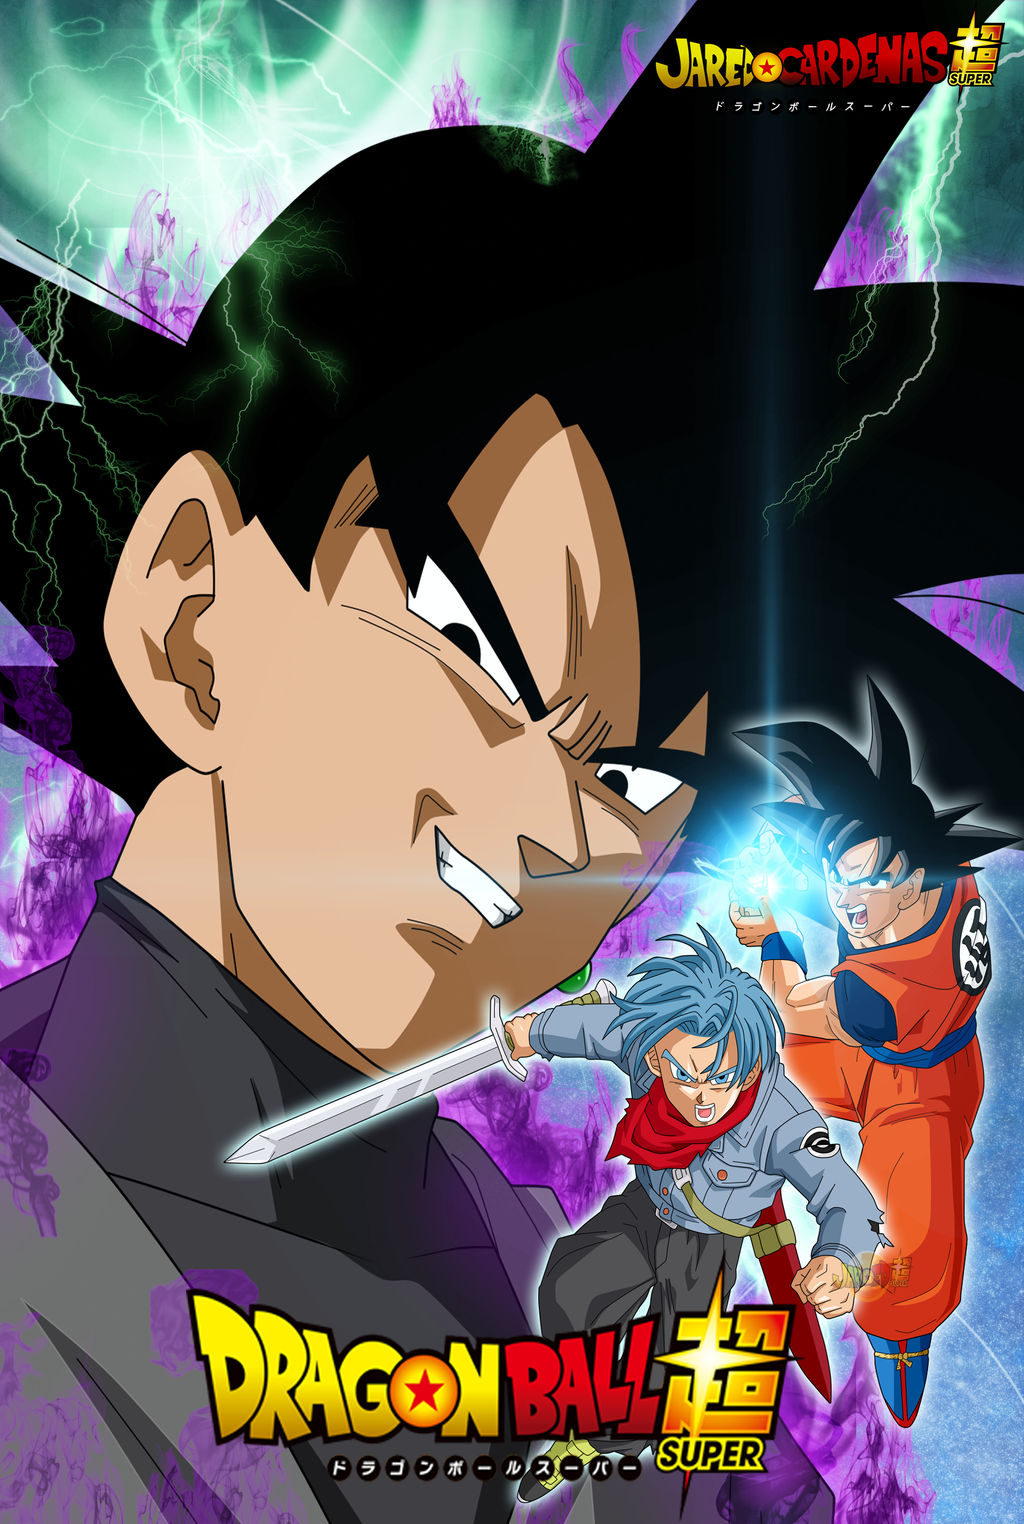 Poster Goku Black dbs Batalla inicia by jaredsongohan on DeviantArt